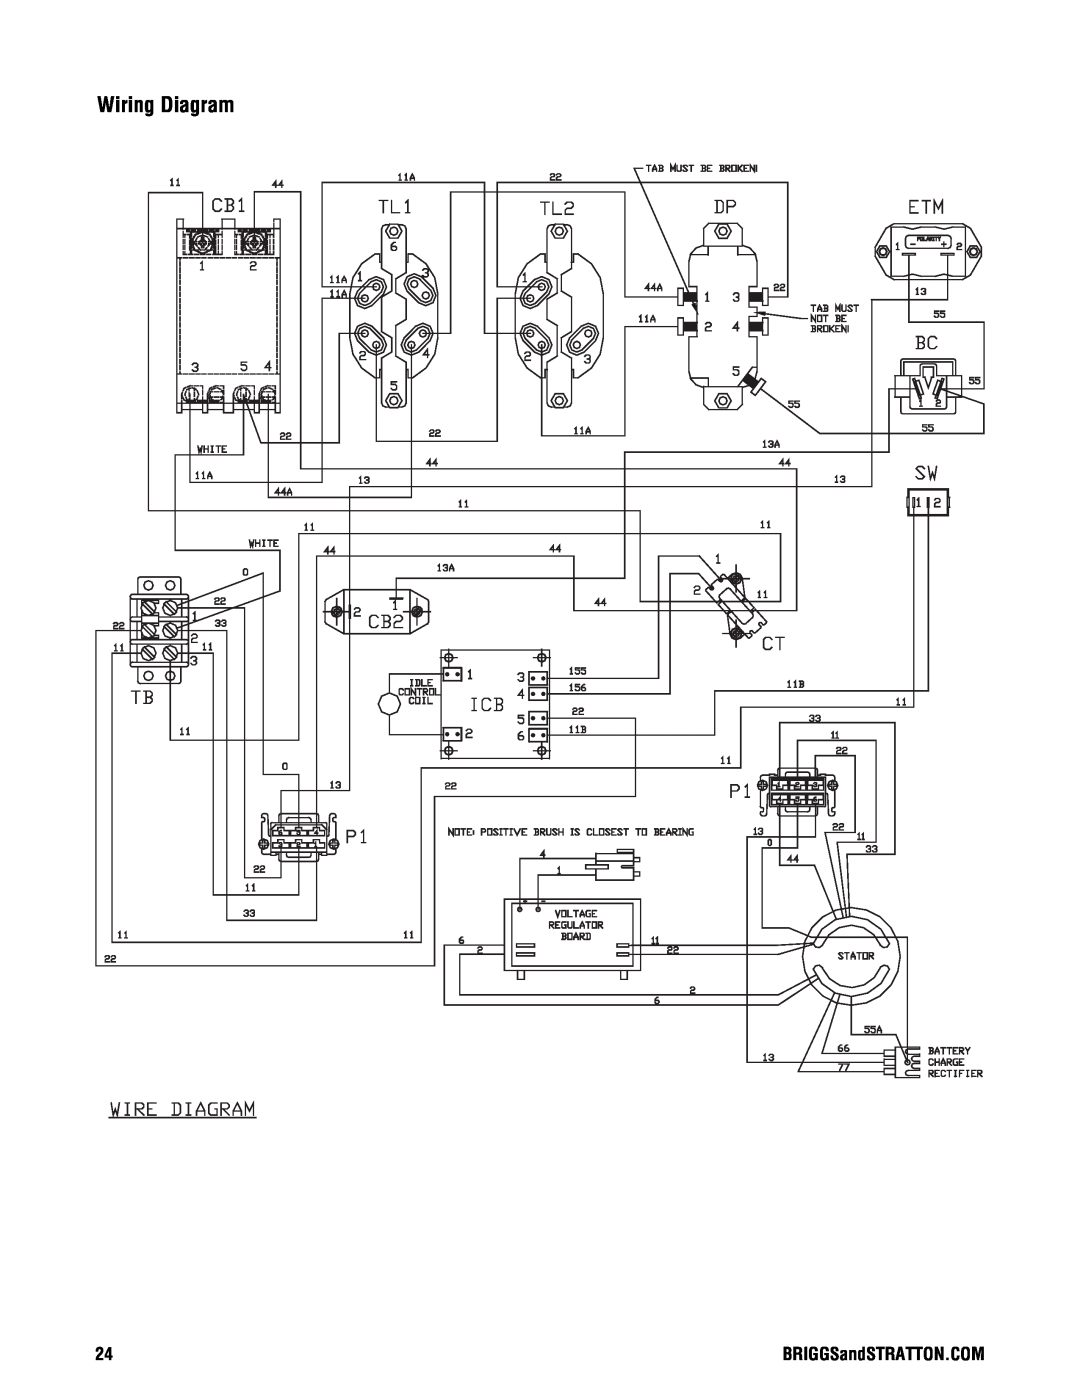 Briggs & Stratton PRO4000 manual Wiring Diagram, BRIGGSandSTRATTON.COM 